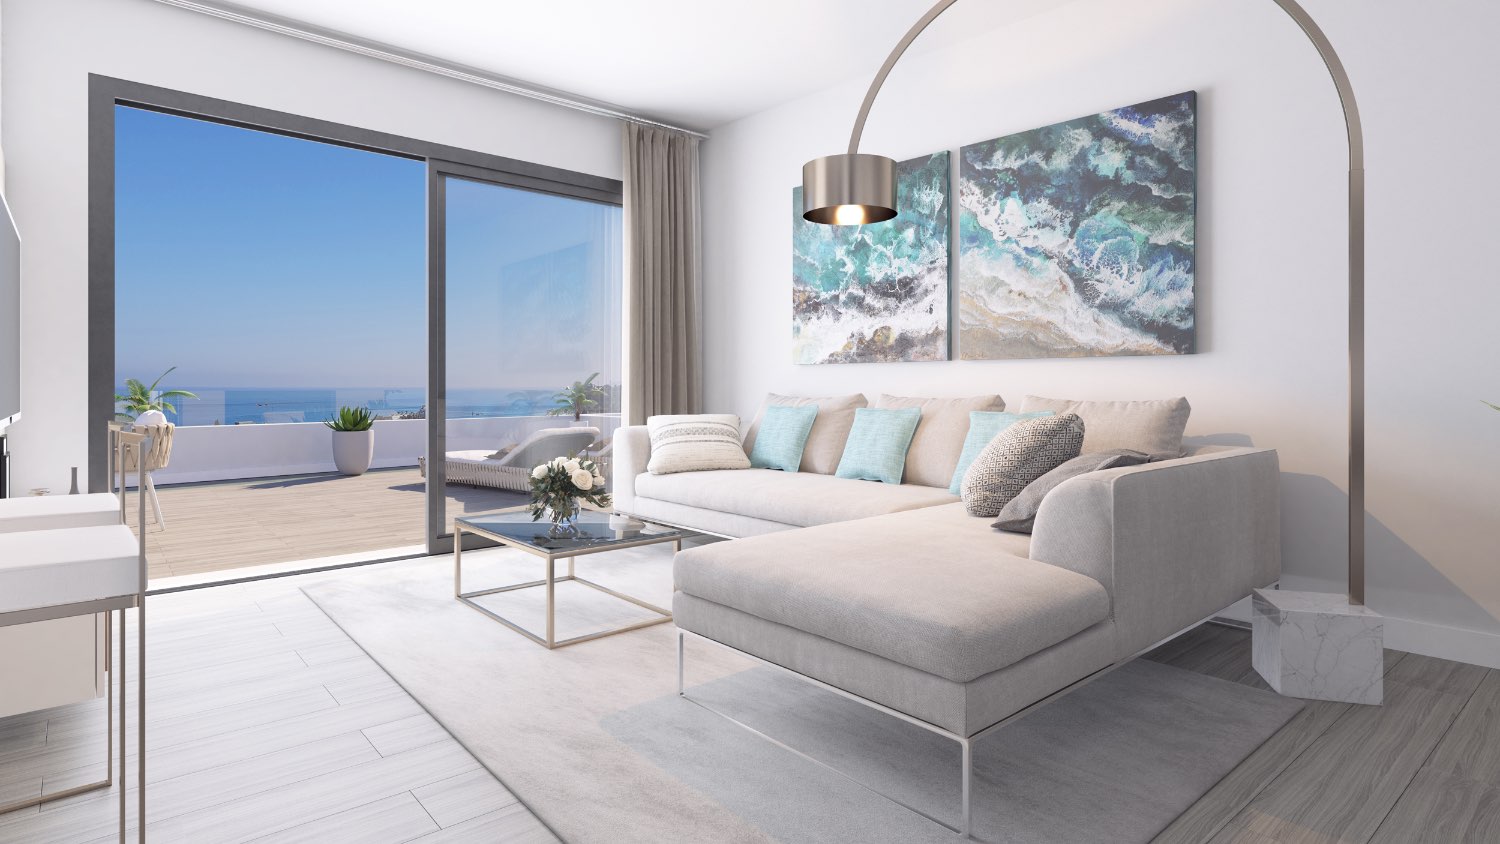 Modern, new-built luxury ground floor apartment in Estepona